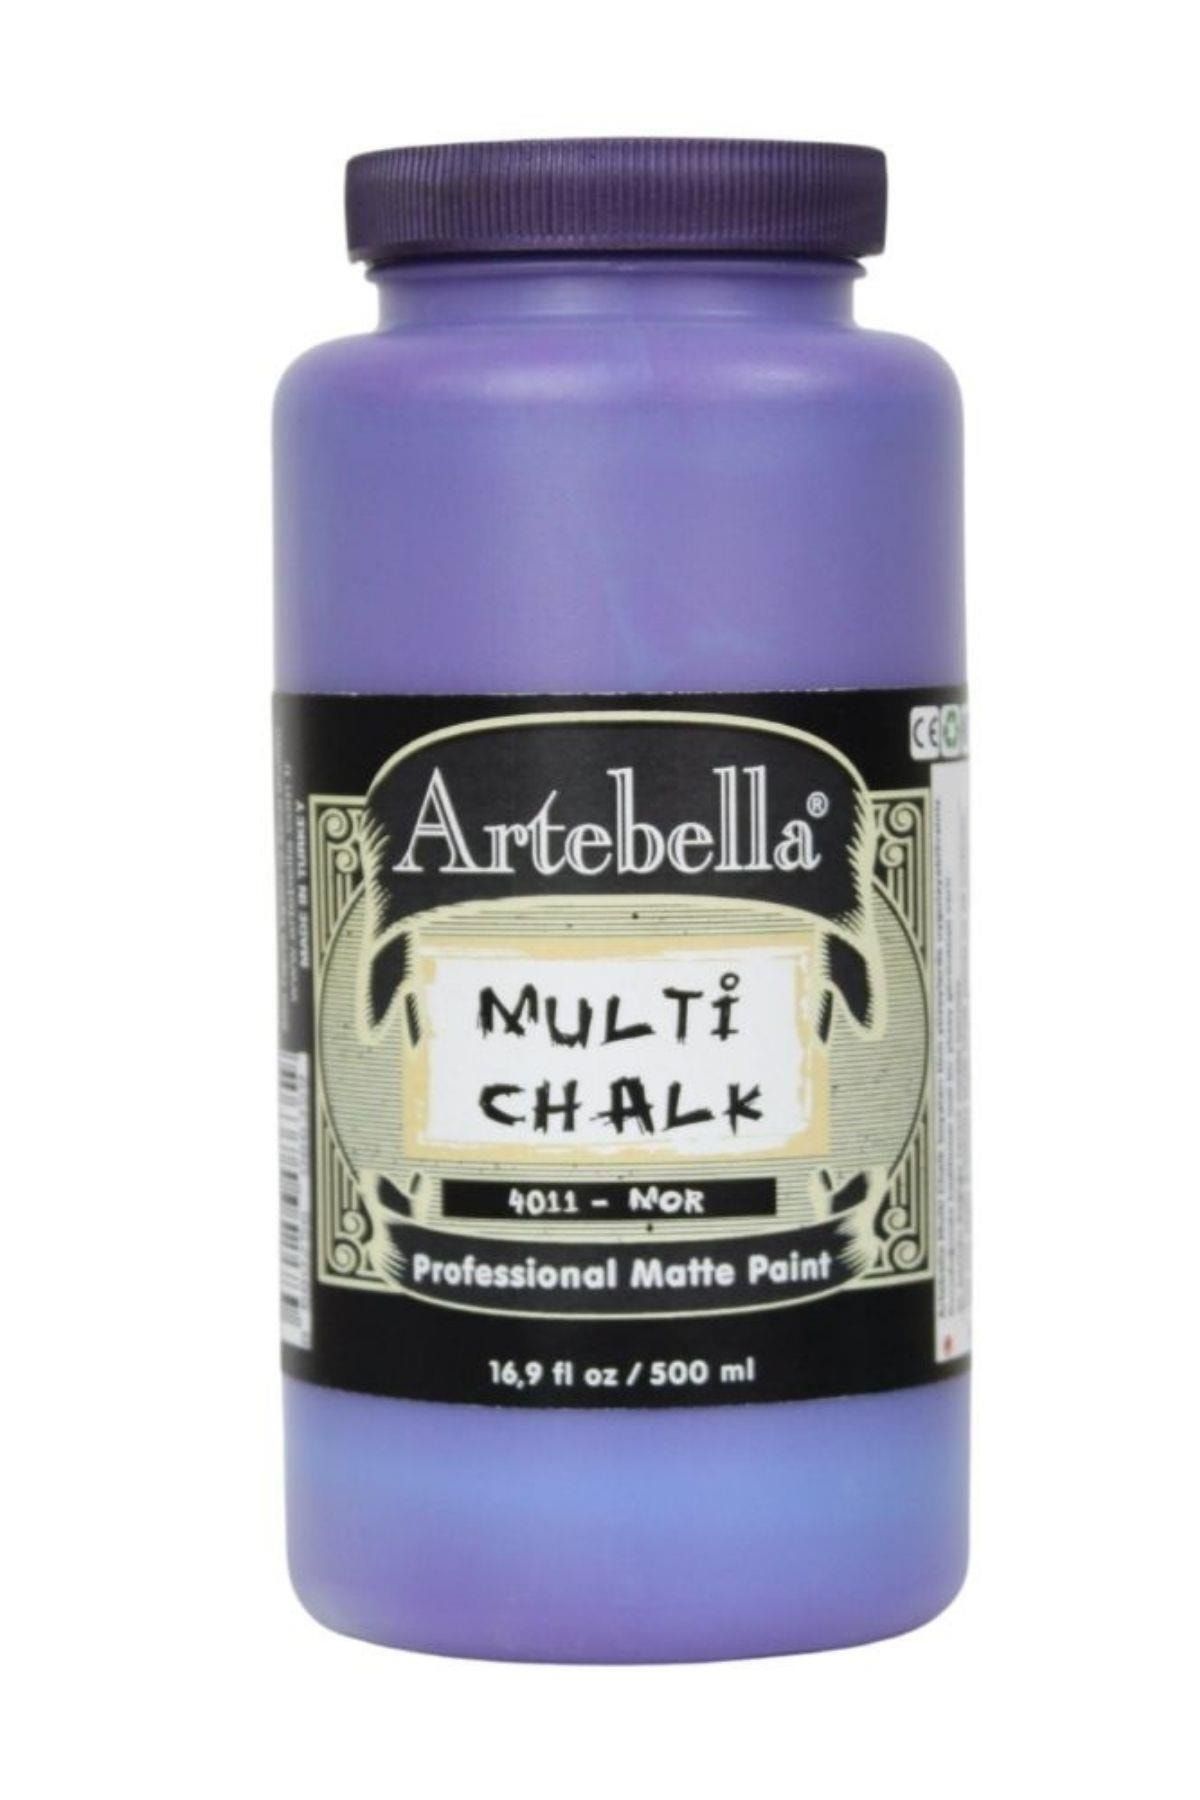 Artebella Multi Decor Chalked Boya 4011 Mor 500 ml